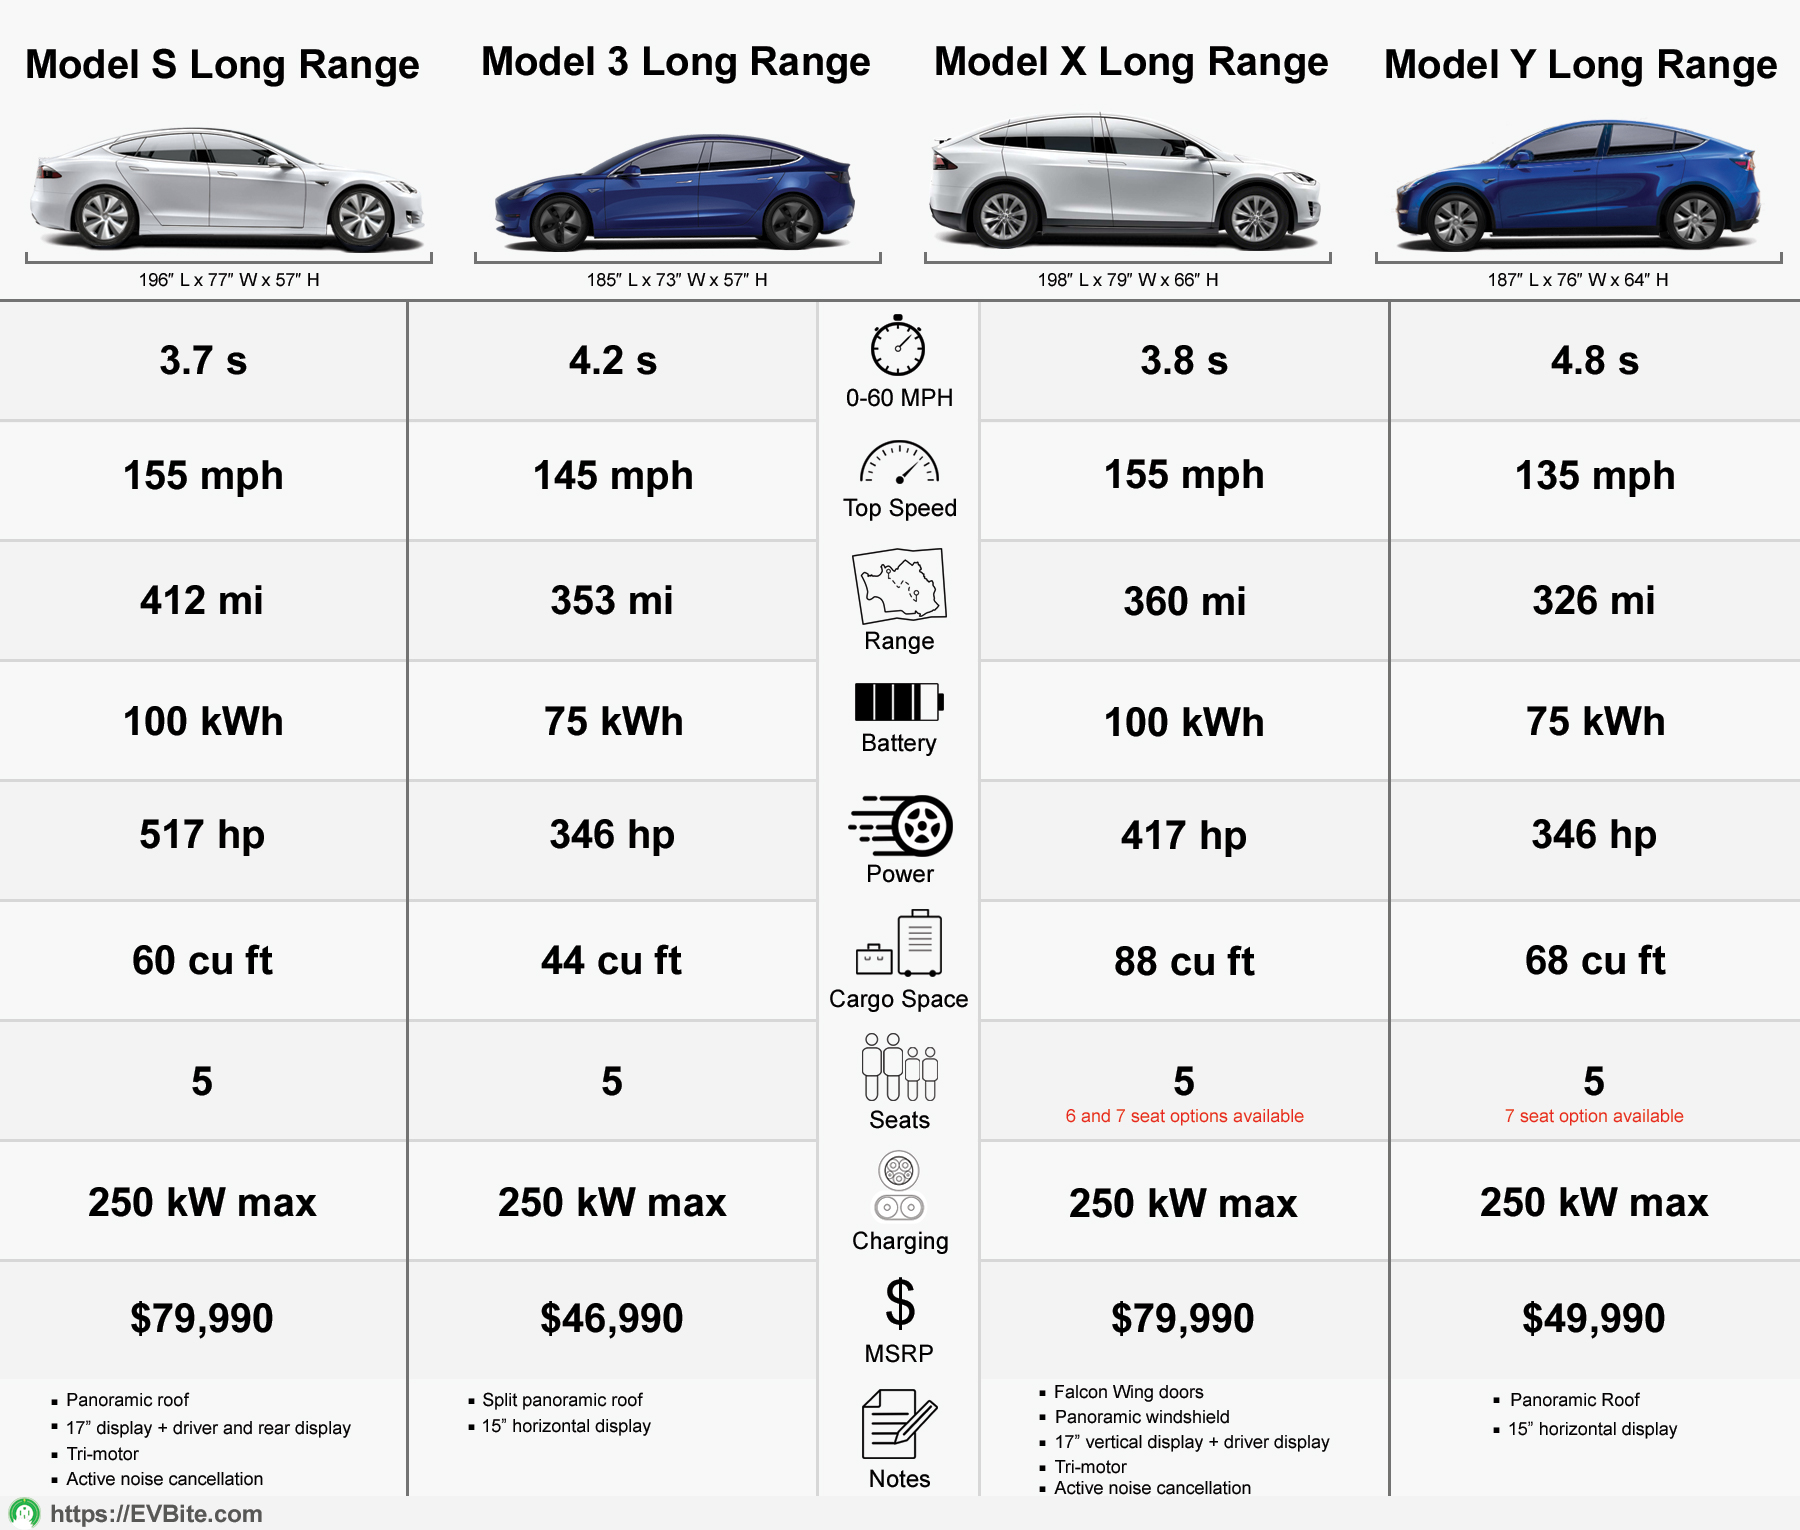 Tesla Thermal Size Chart